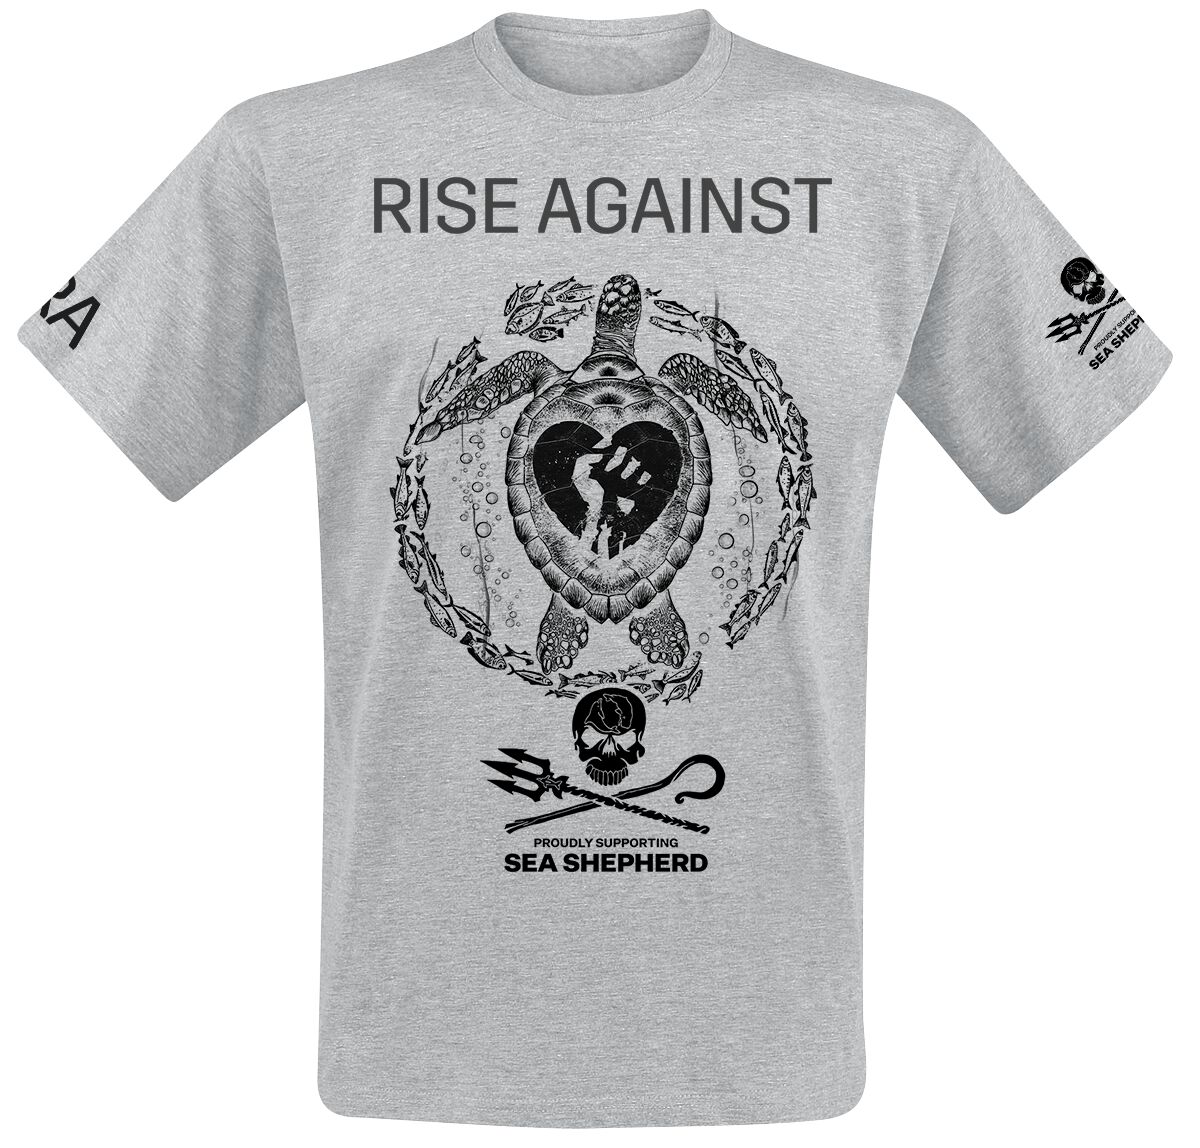 Rise Against T-Shirt - Sea Shepherd Cooperation - Our Precious Time Is Running Out - S bis 3XL - für Männer - Größe XL - grau meliert  - EMP